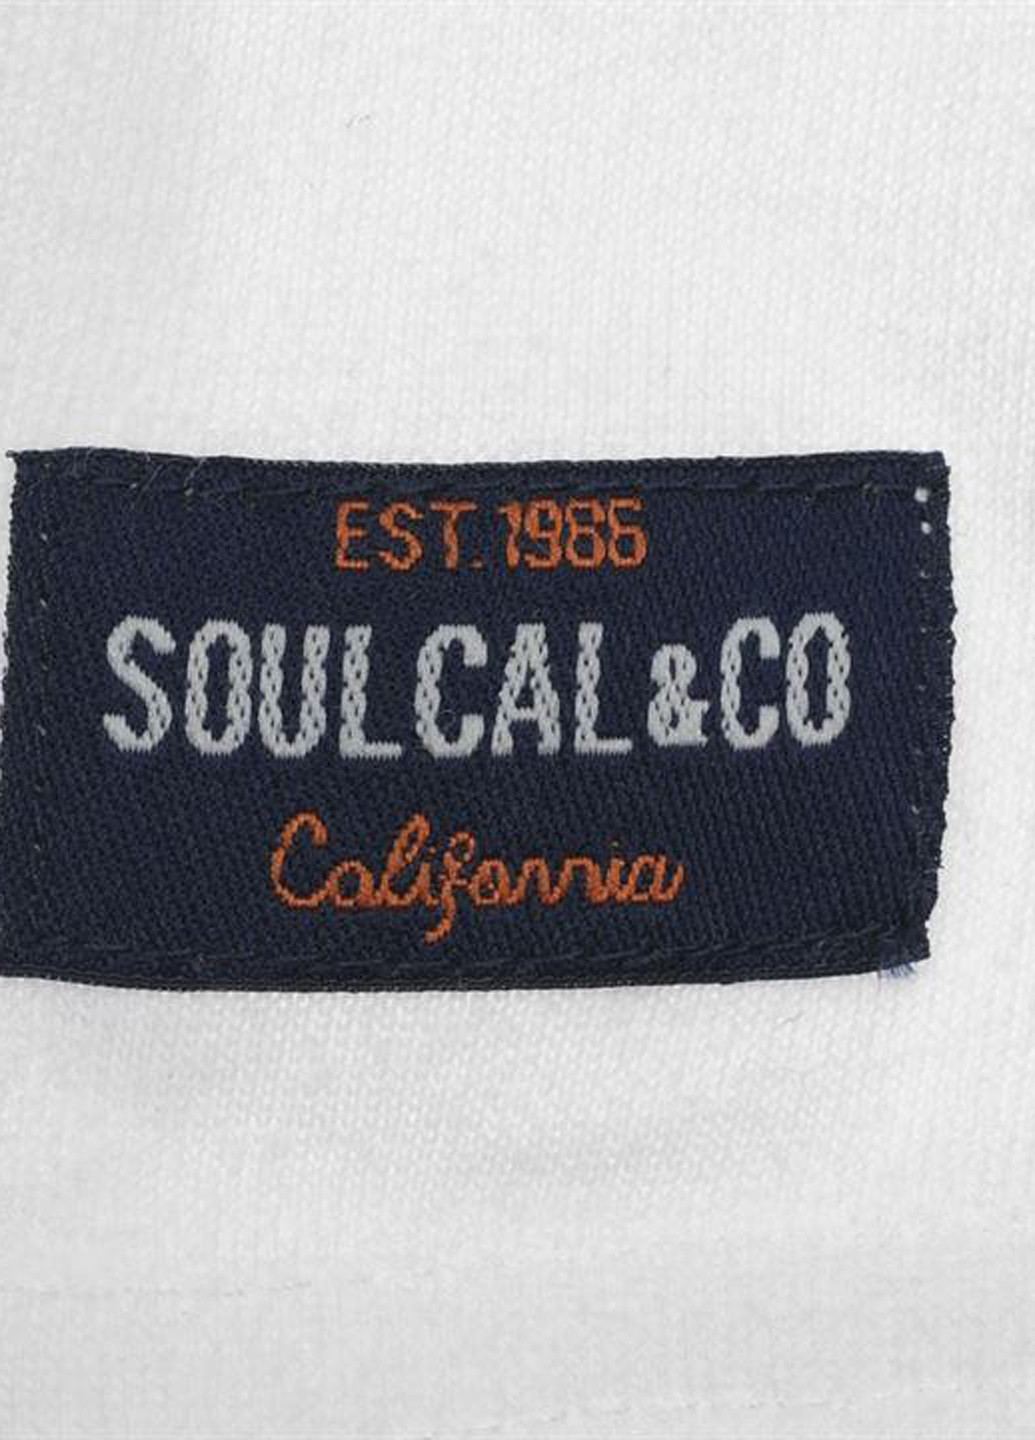 Молочна футболка Soulcal & Co